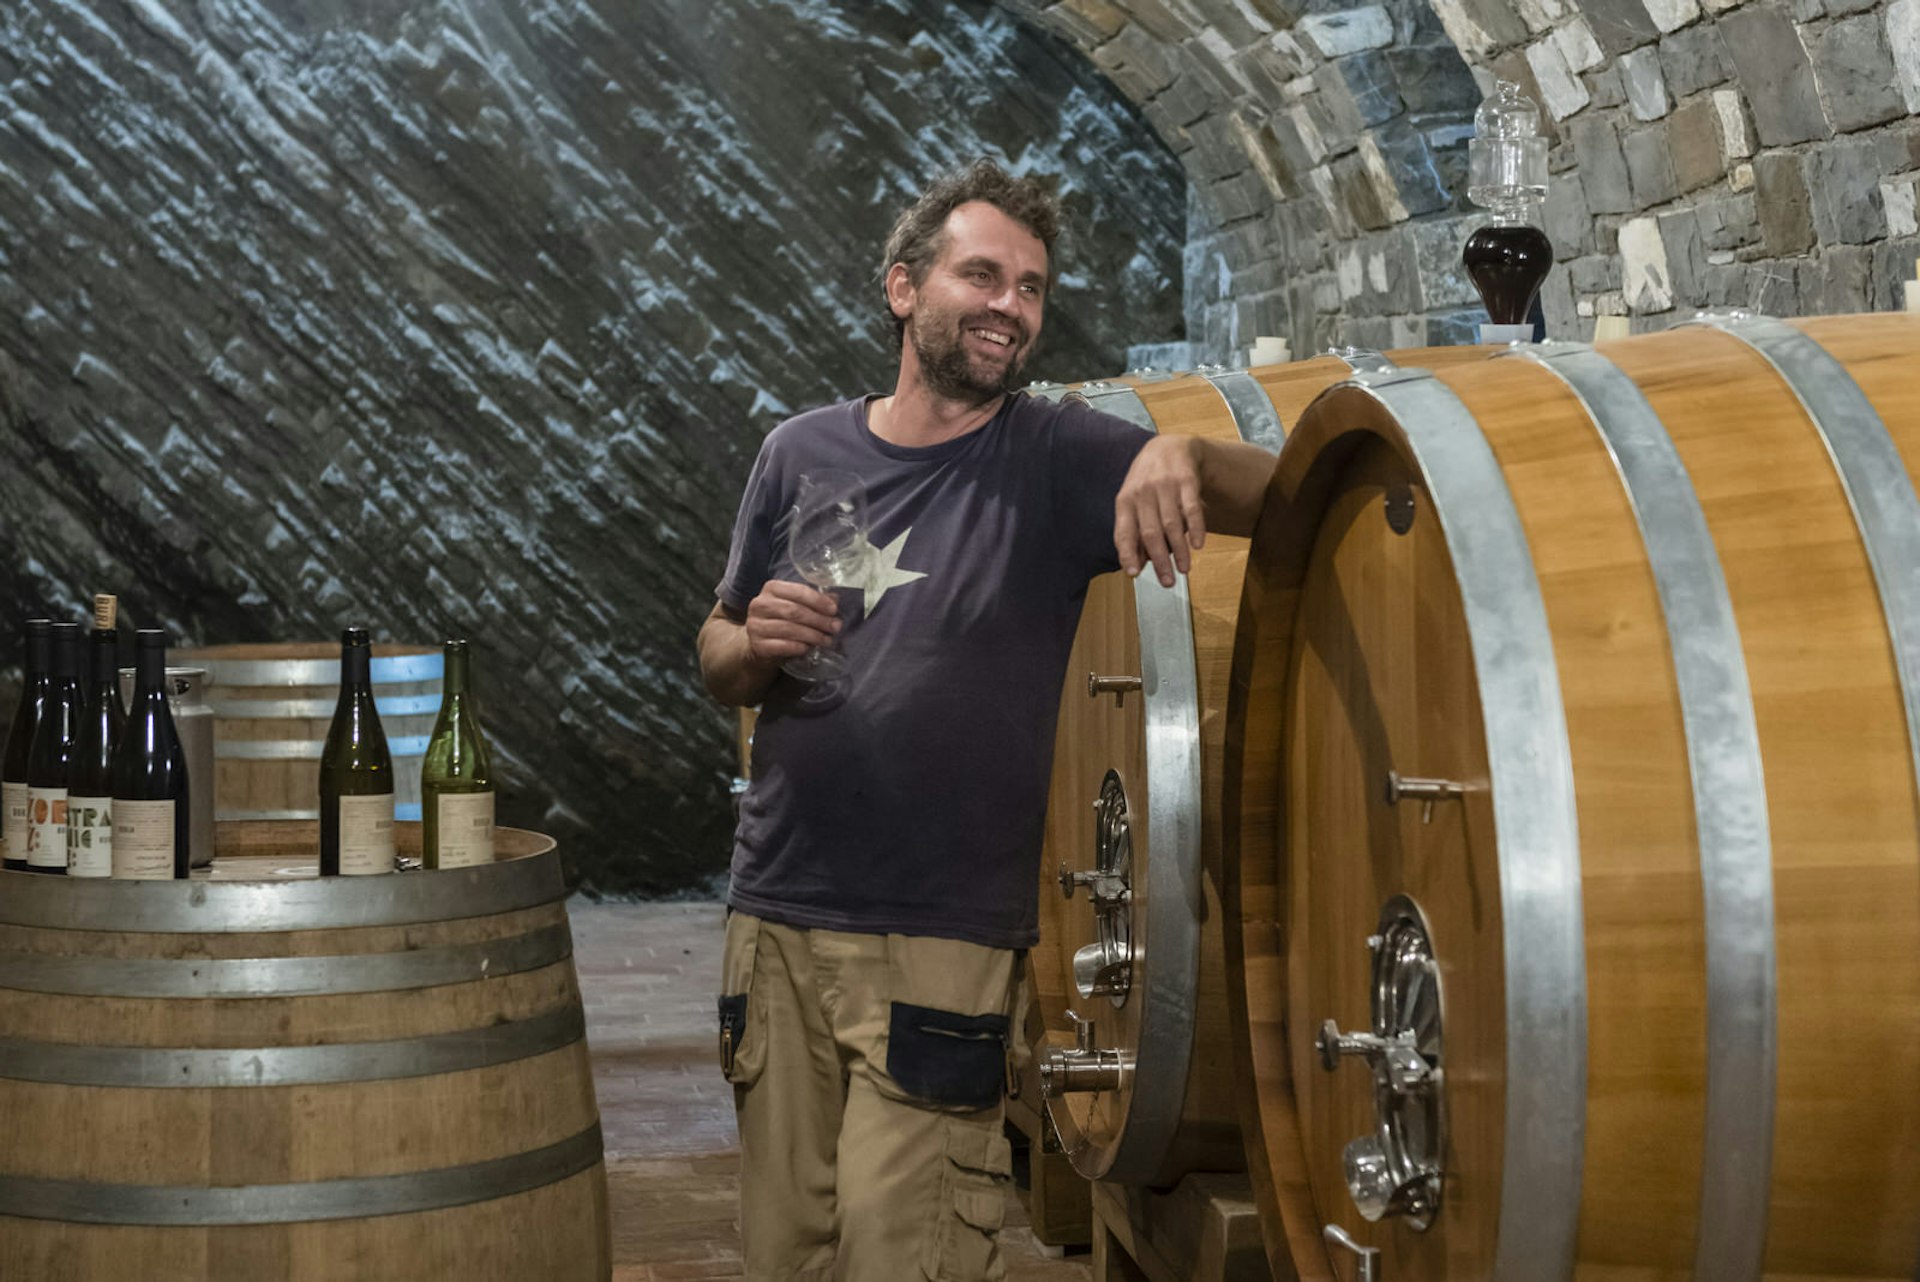 Winemaker Primoz Lavrenčič leads a wine-tasting in his wine cellar © Justin Foulkes / Lonely Planet